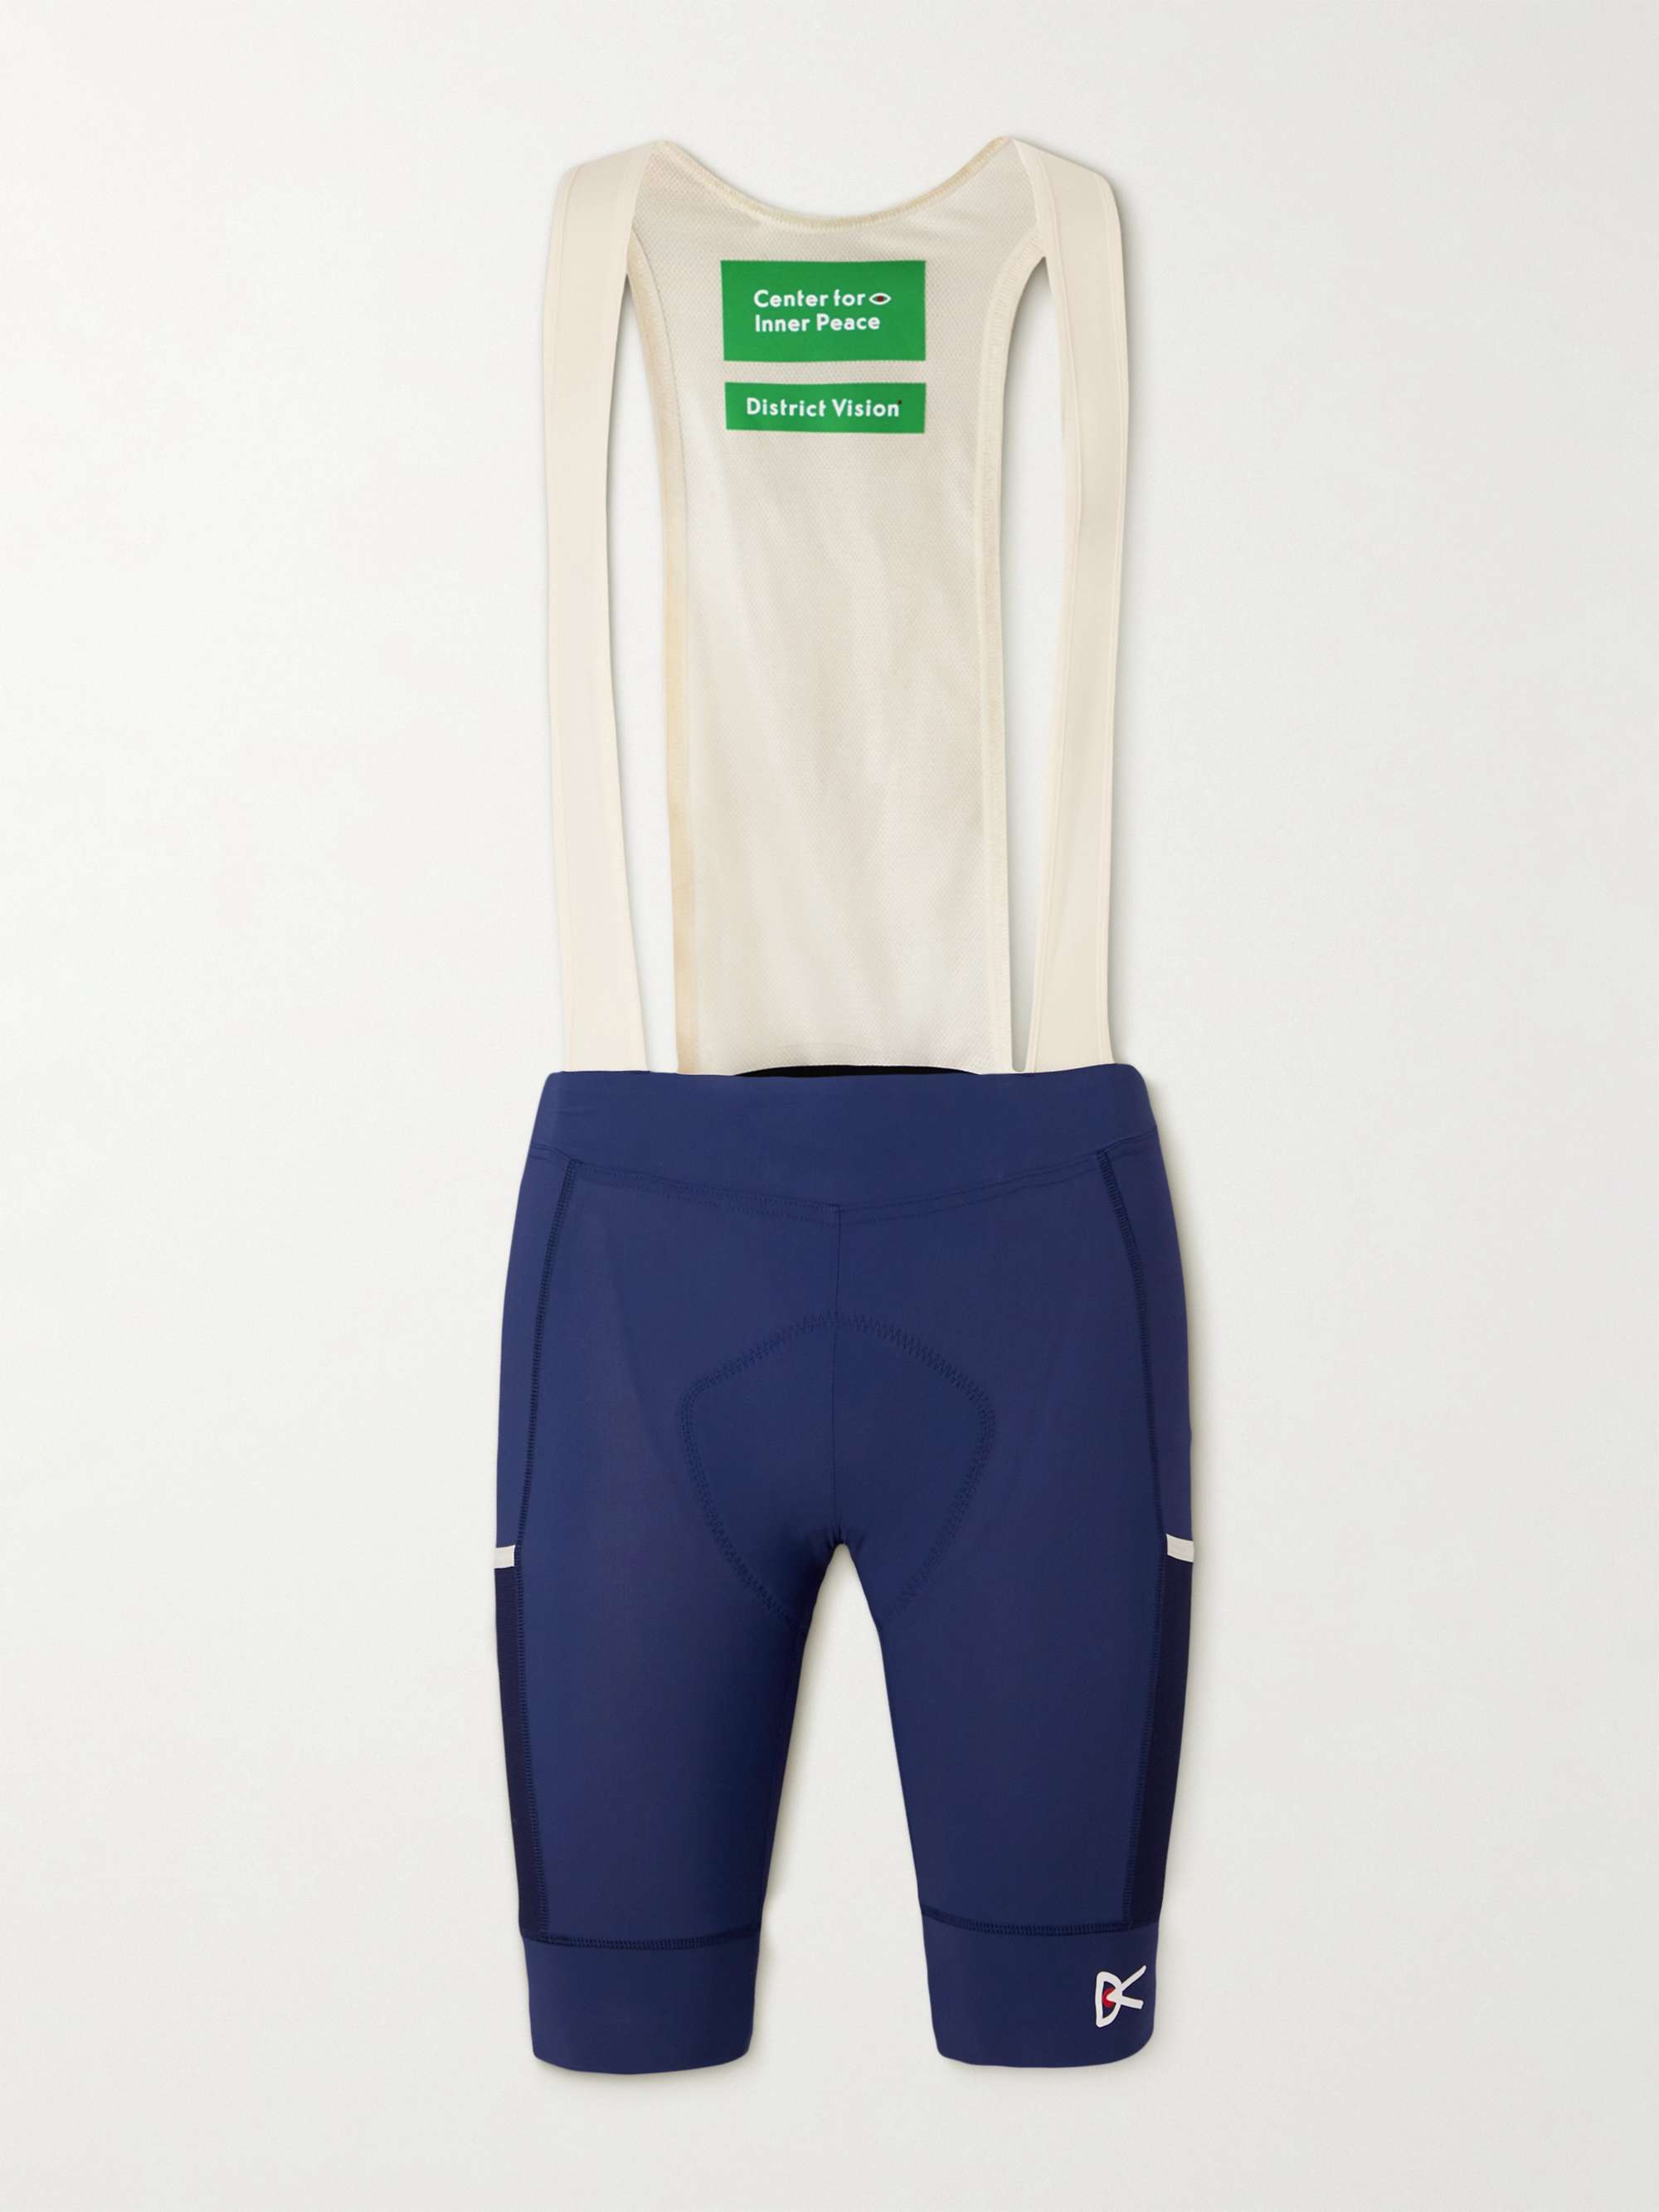 DISTRICT VISION Stretch Recycled-Nylon Cycling Bib Shorts | MR PORTER